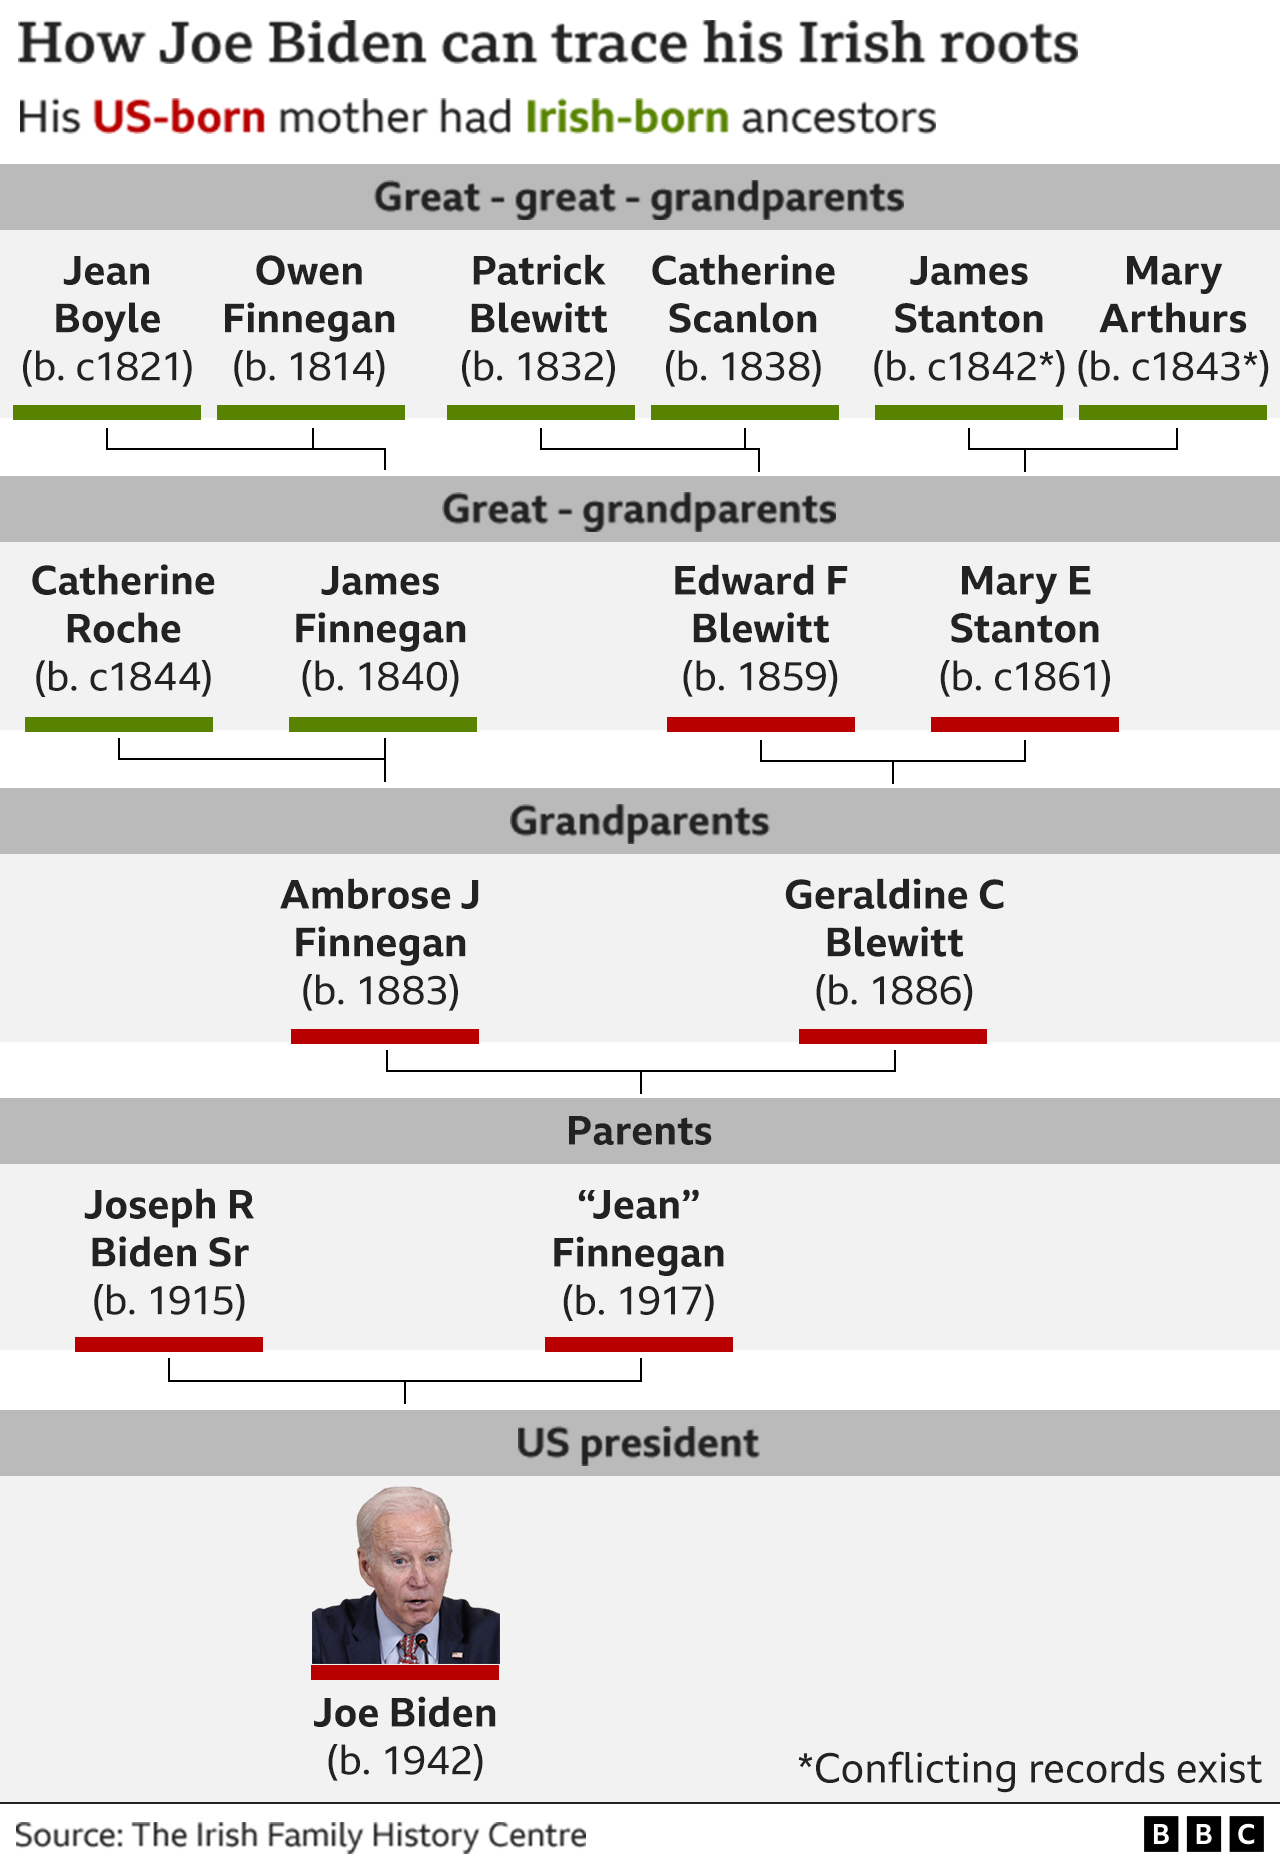 Biden's Irish family tree